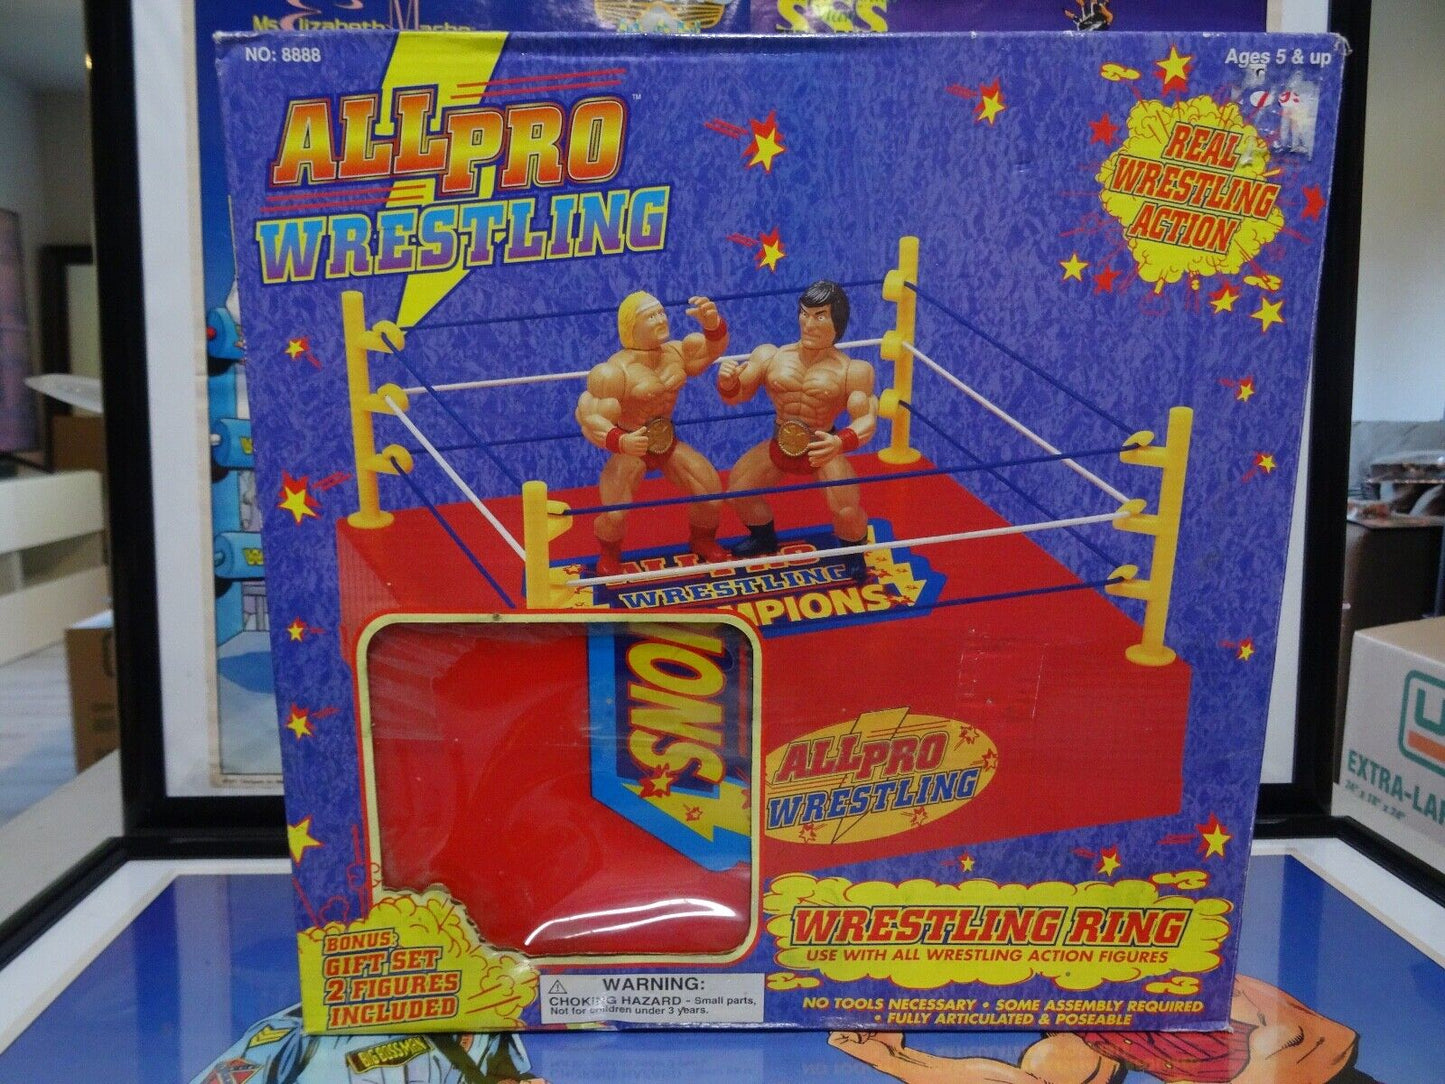 AllPro Wrestling Bootleg/Knockoff Wrestling Ring